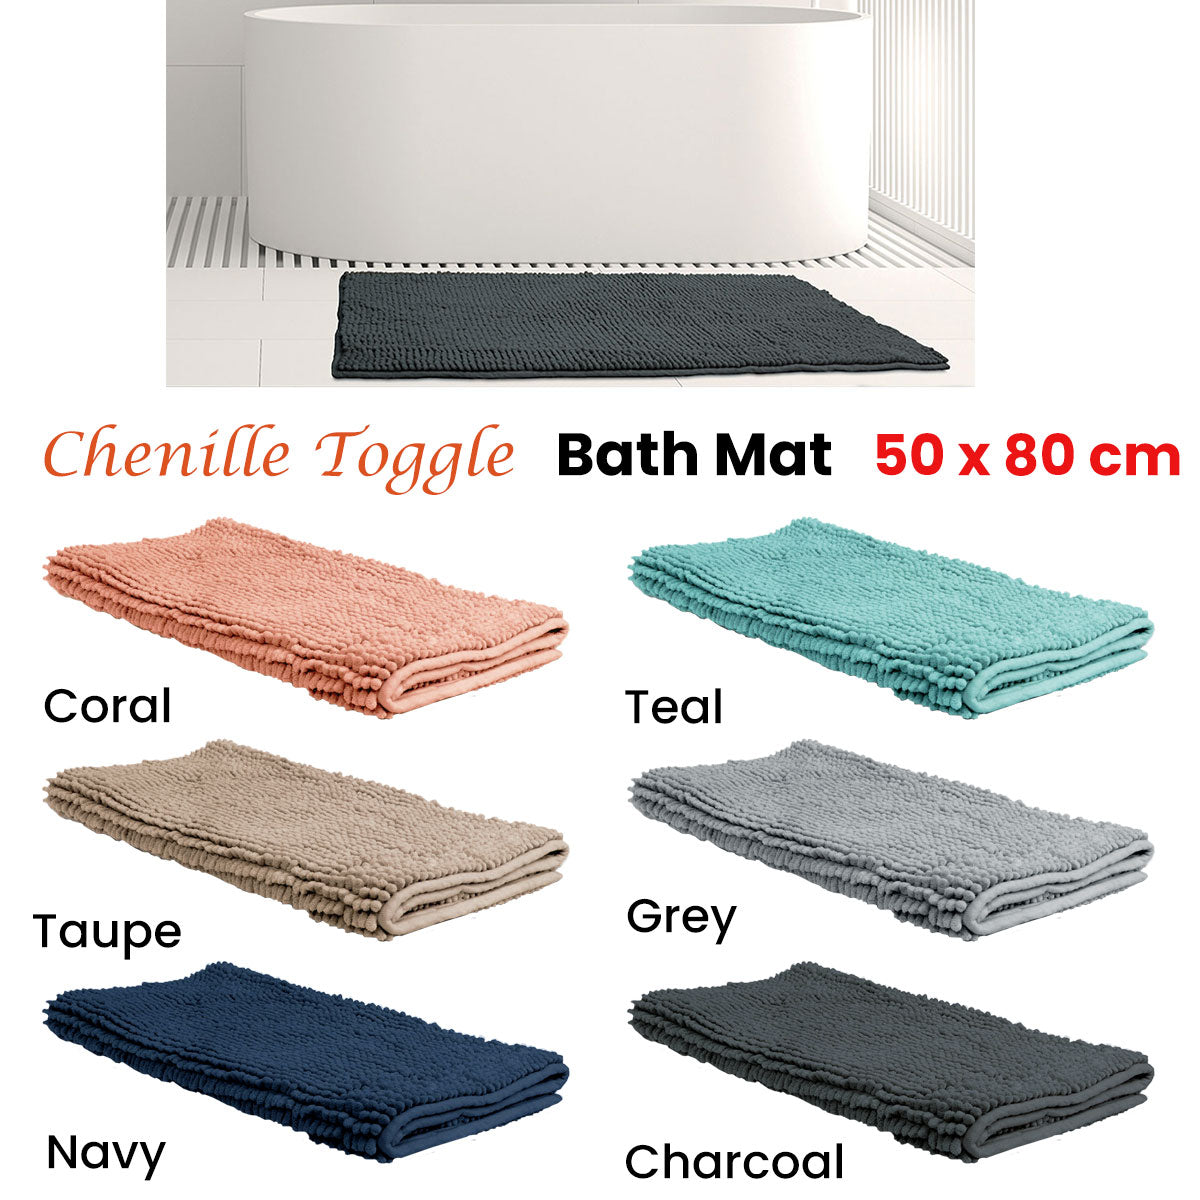 Chenille Toggle Bath Mat 50 x 80cm Grey